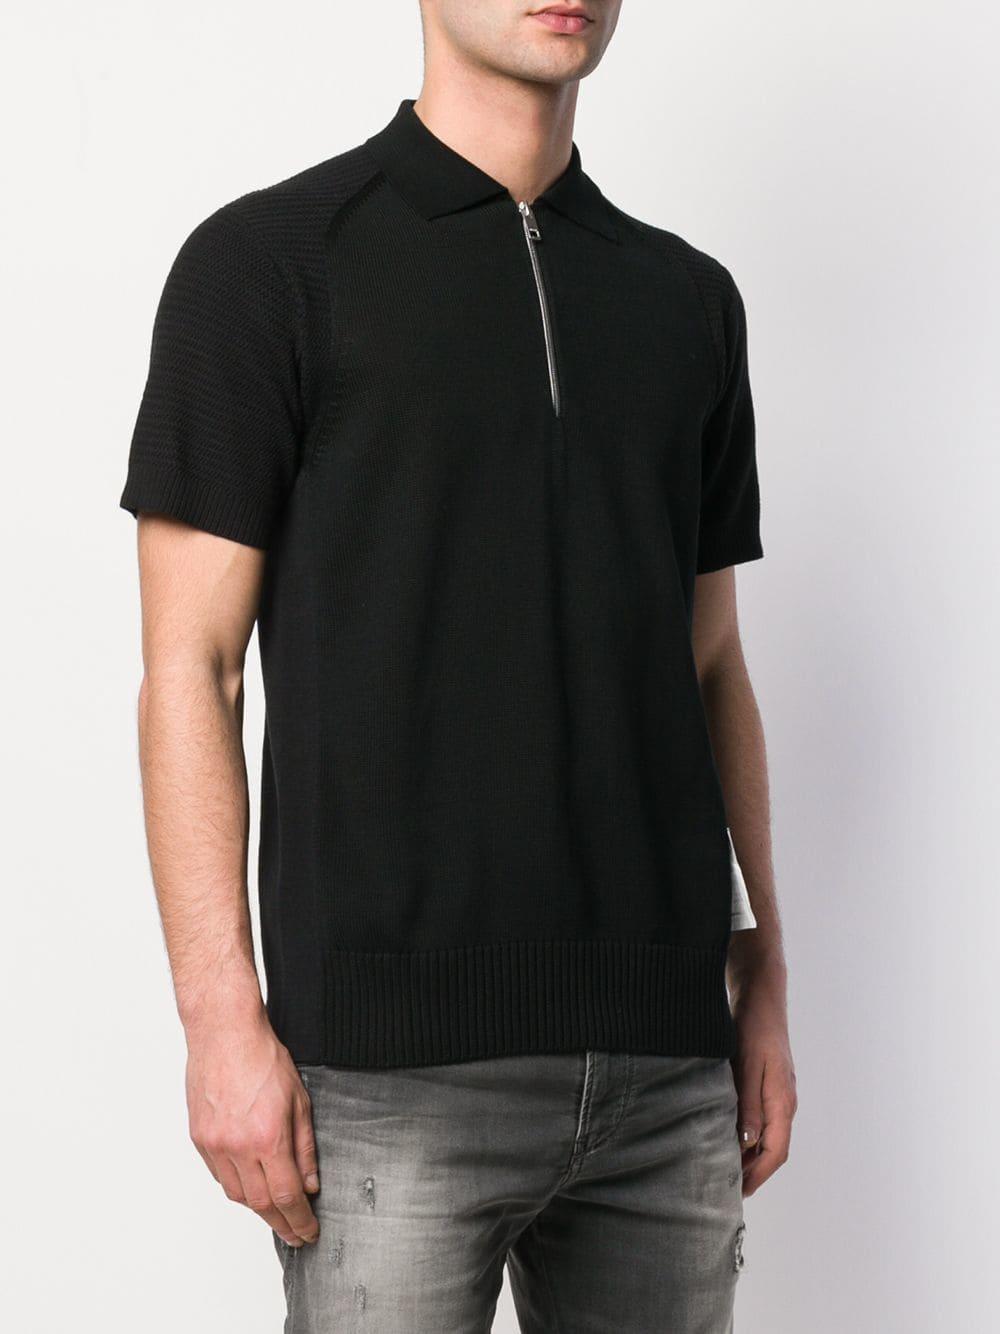 Black half zip knitted polo shirt